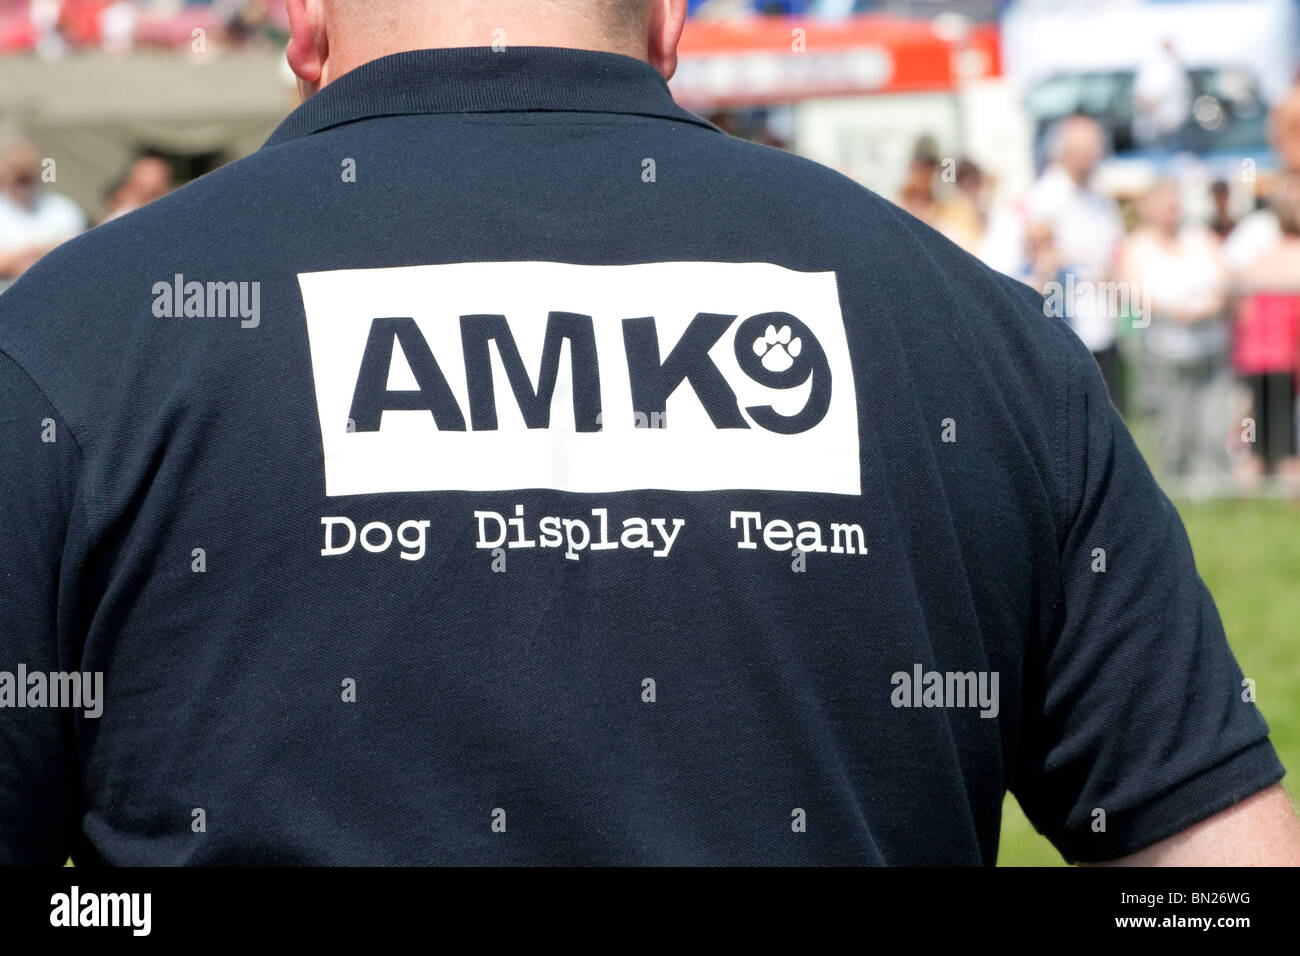 L'AMK9 display dog team Foto Stock